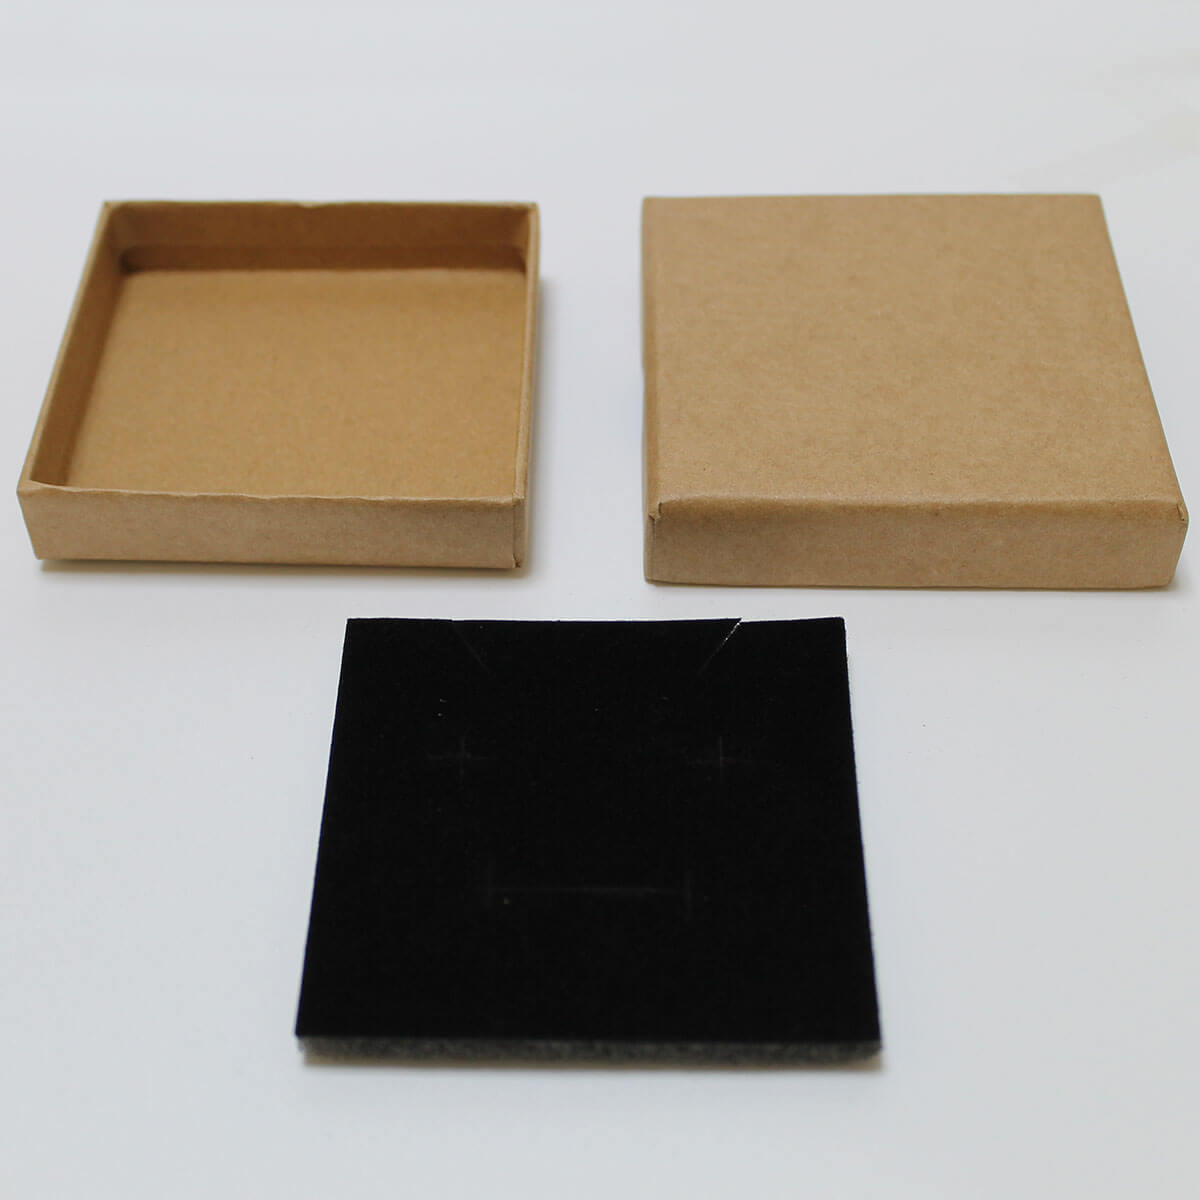 [32 шт. комплект ] подарочная коробка коробка упаковка упаковка box подарок упаковка аксессуары подарок упаковка 